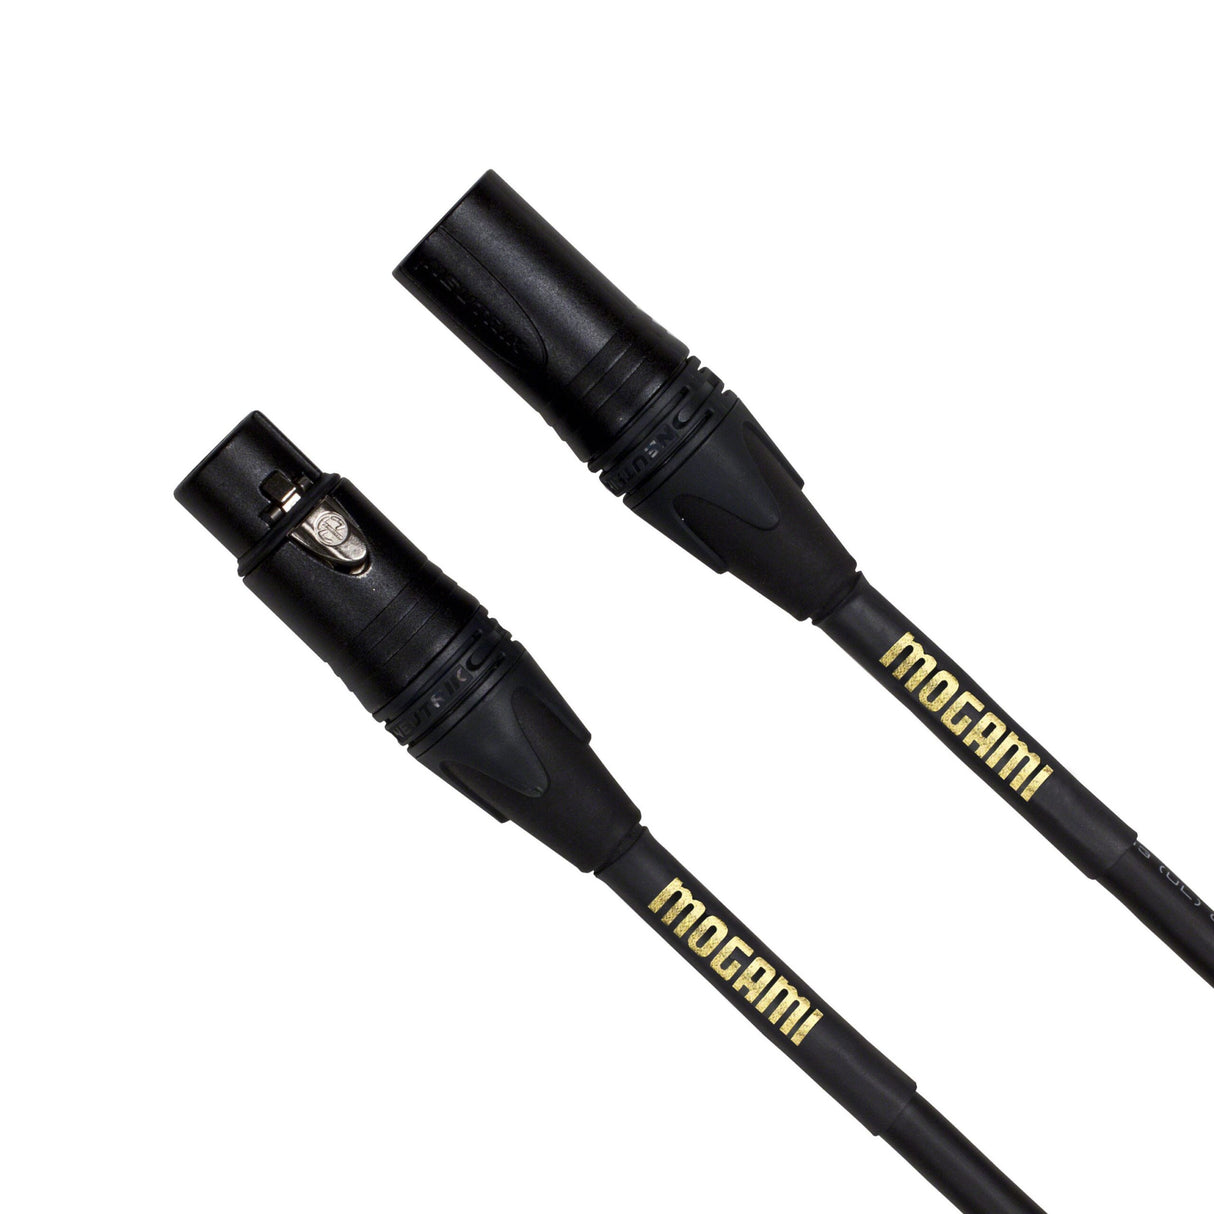 Mogami GOLD AES 60 AES / EBU XLR to XLR Cable, 60-Feet